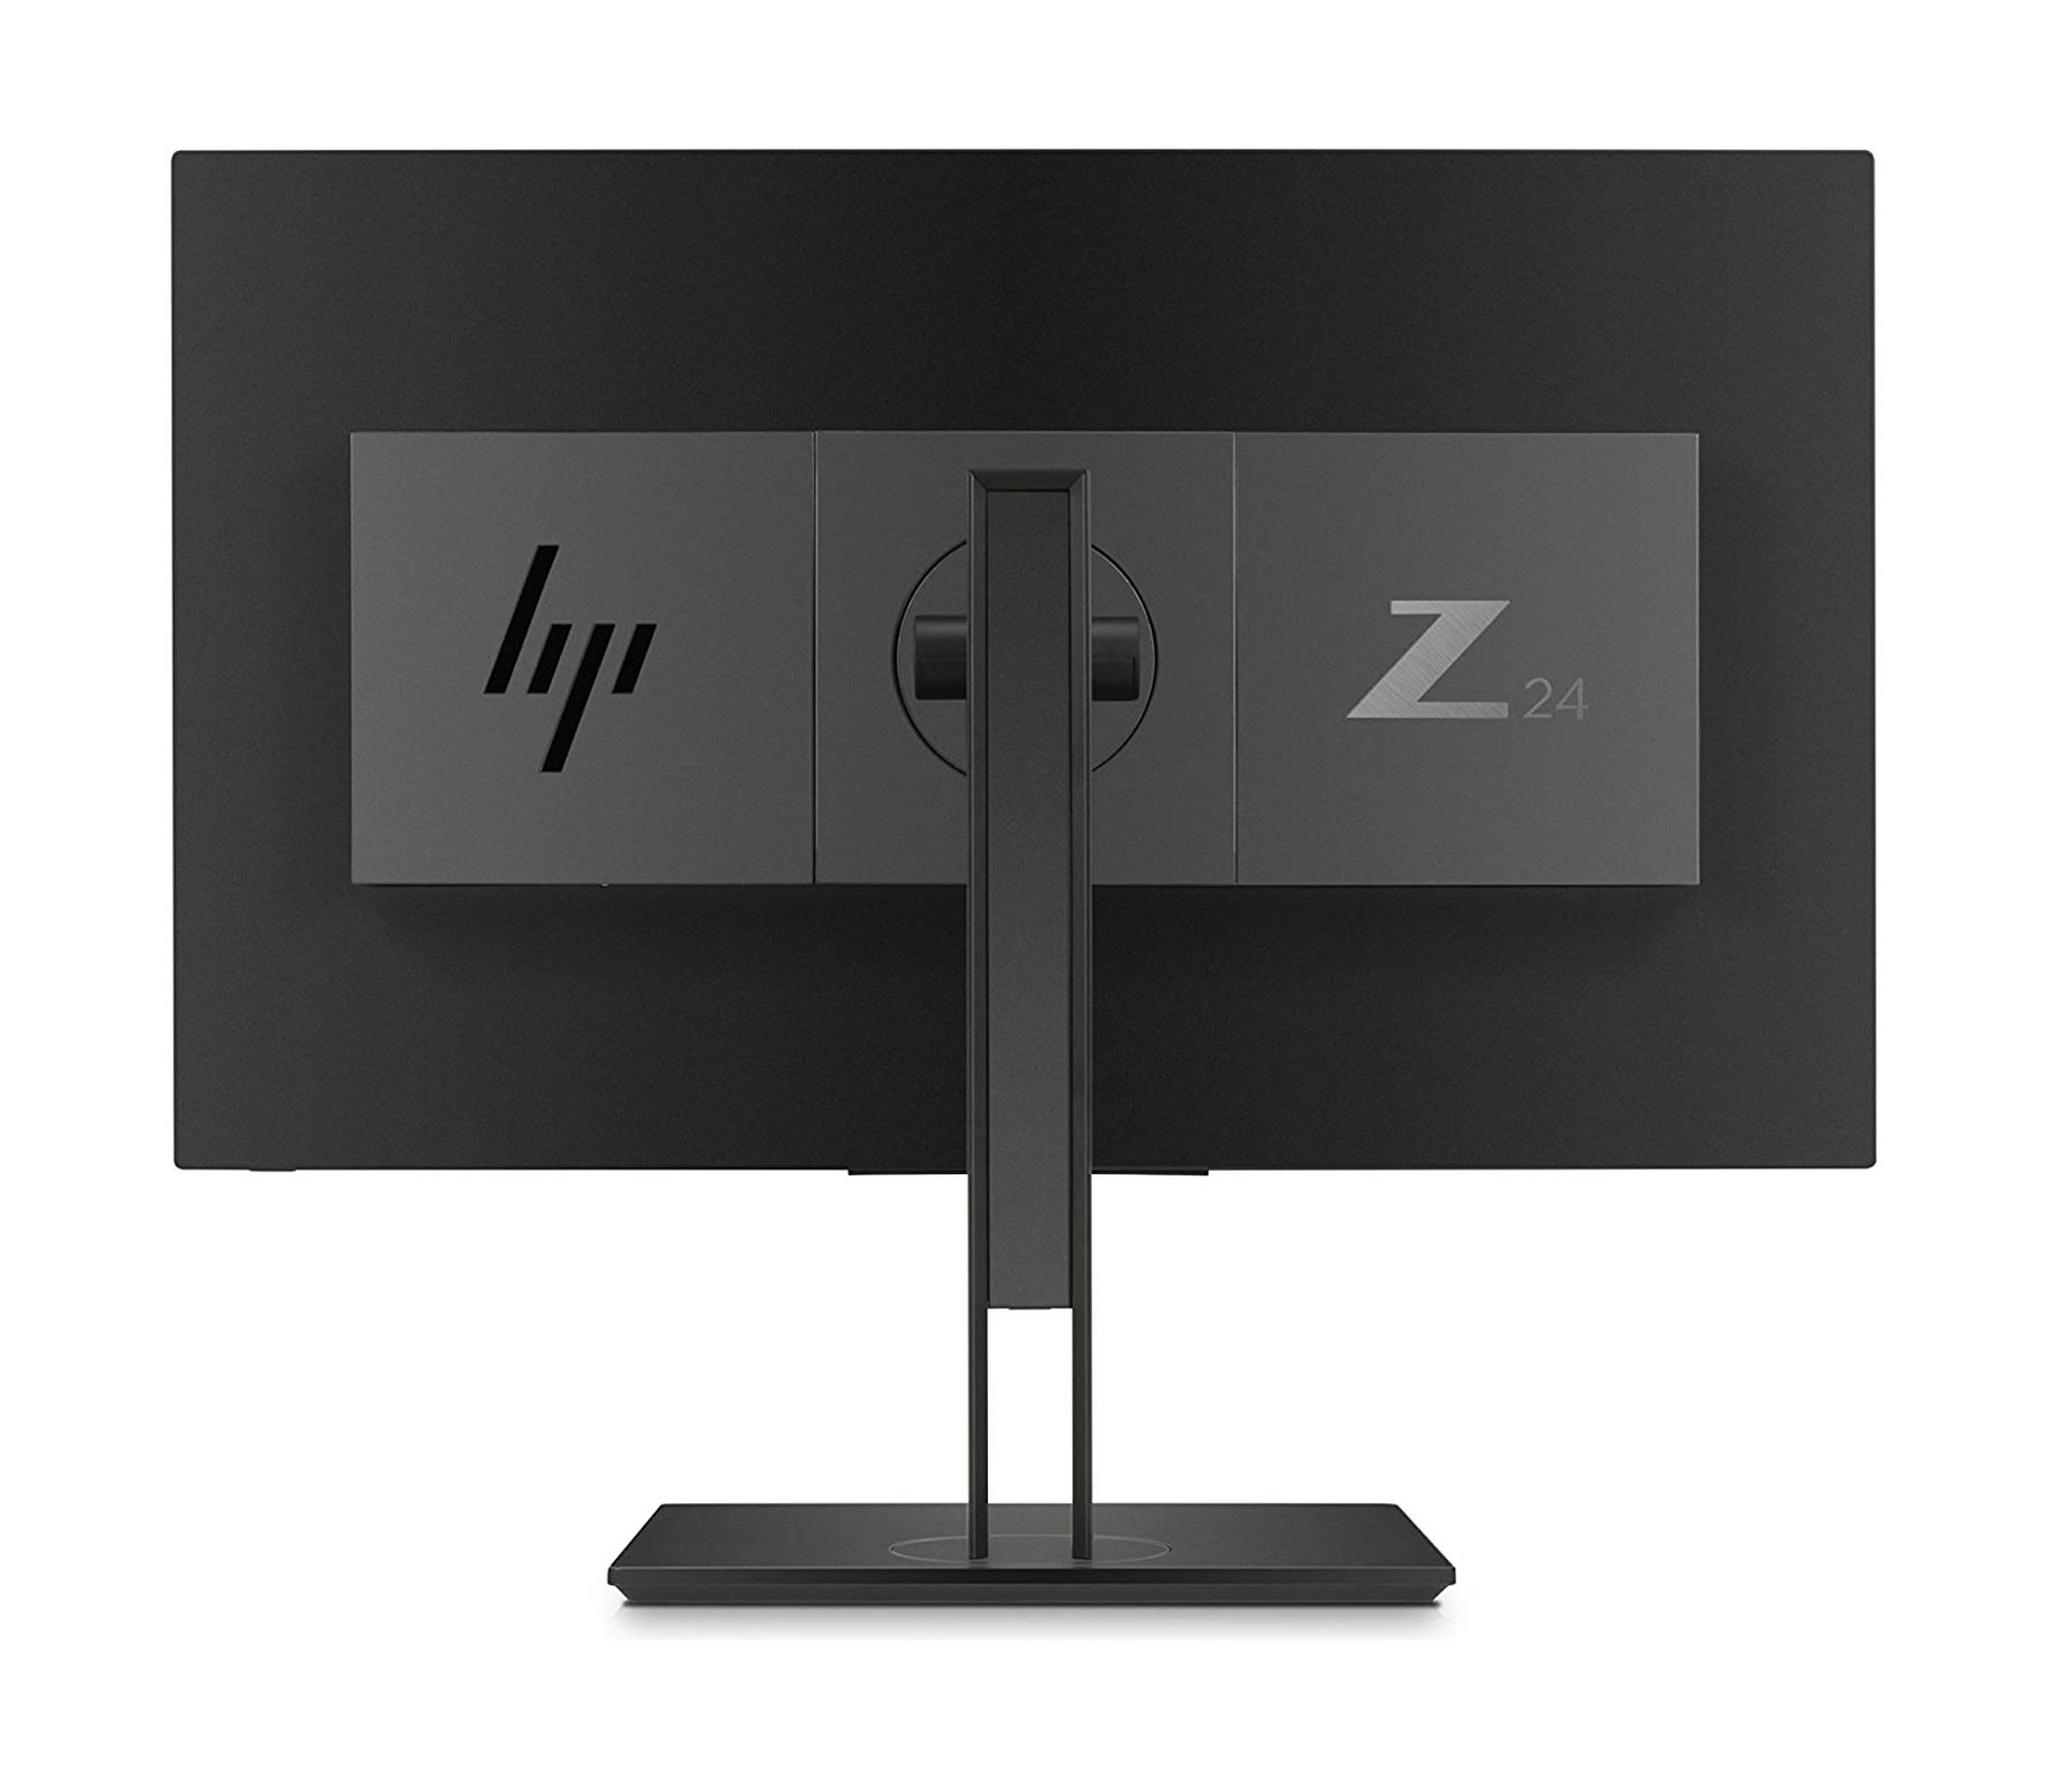 HP Z24nf Display 23.8-Inch Screen LED-Lit Monitor - Black